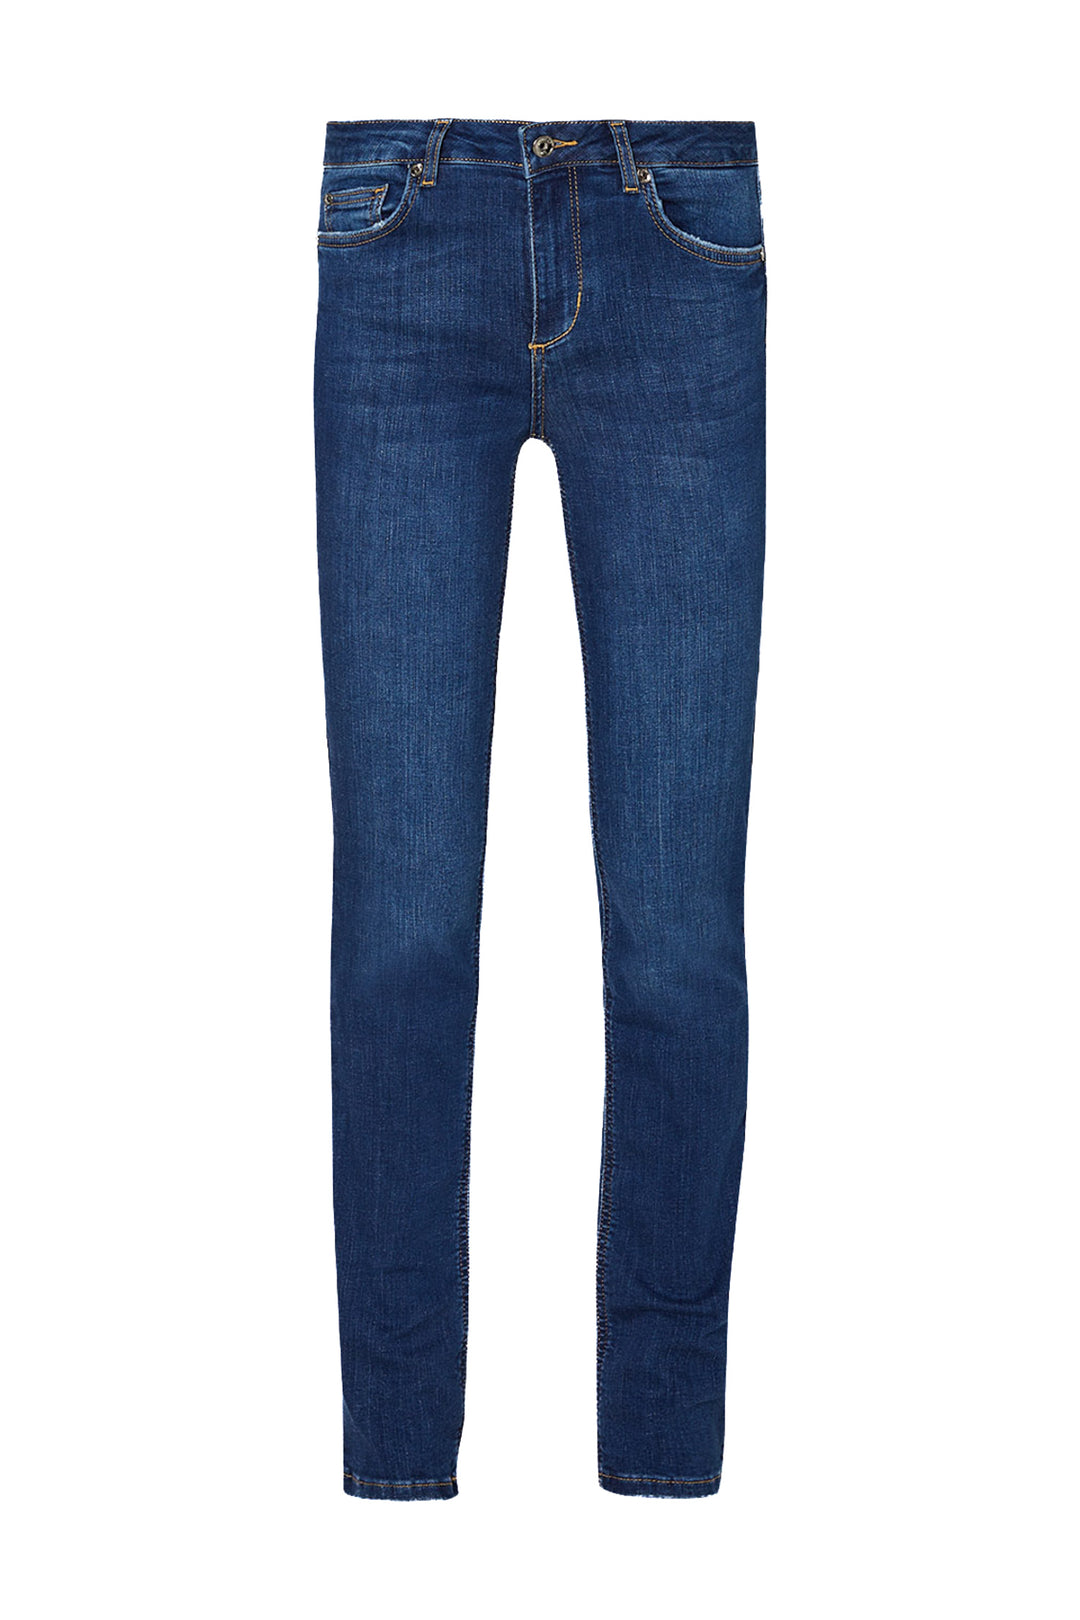 LIU JO Jeans slim bottom up in denim di cotone stretch lavaggio used - Mancinelli 1954